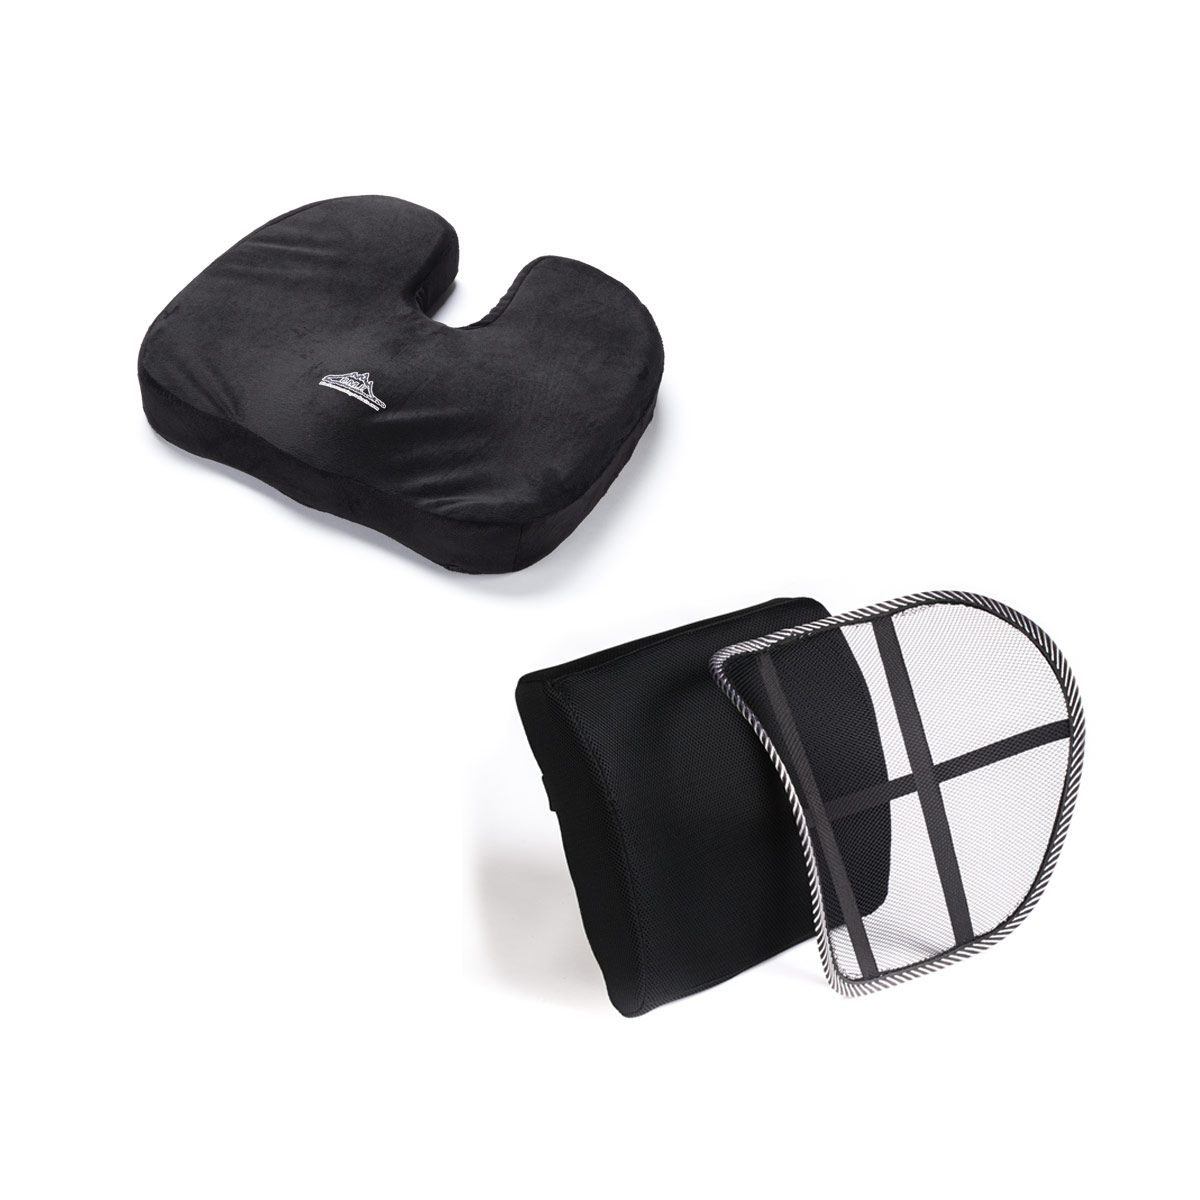 https://blackmountainproducts.com/wp-content/uploads/2018/11/Black-Seat-Black-Back-Cushion.jpg